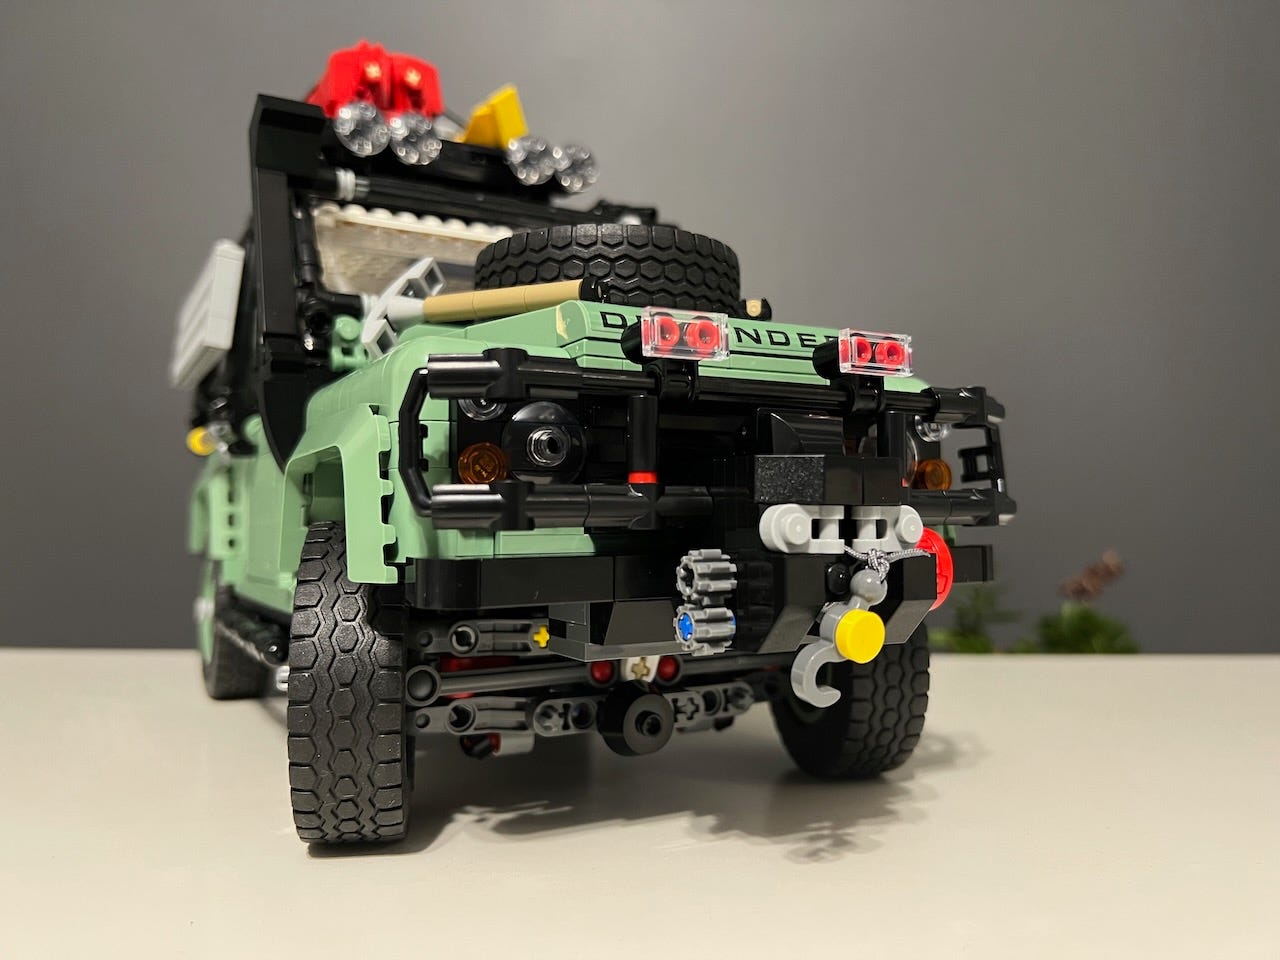 Meet The Best Creator Expert Vehicle LEGO Has Ever Made, by Attila Vágó, Bricks n' Brackets